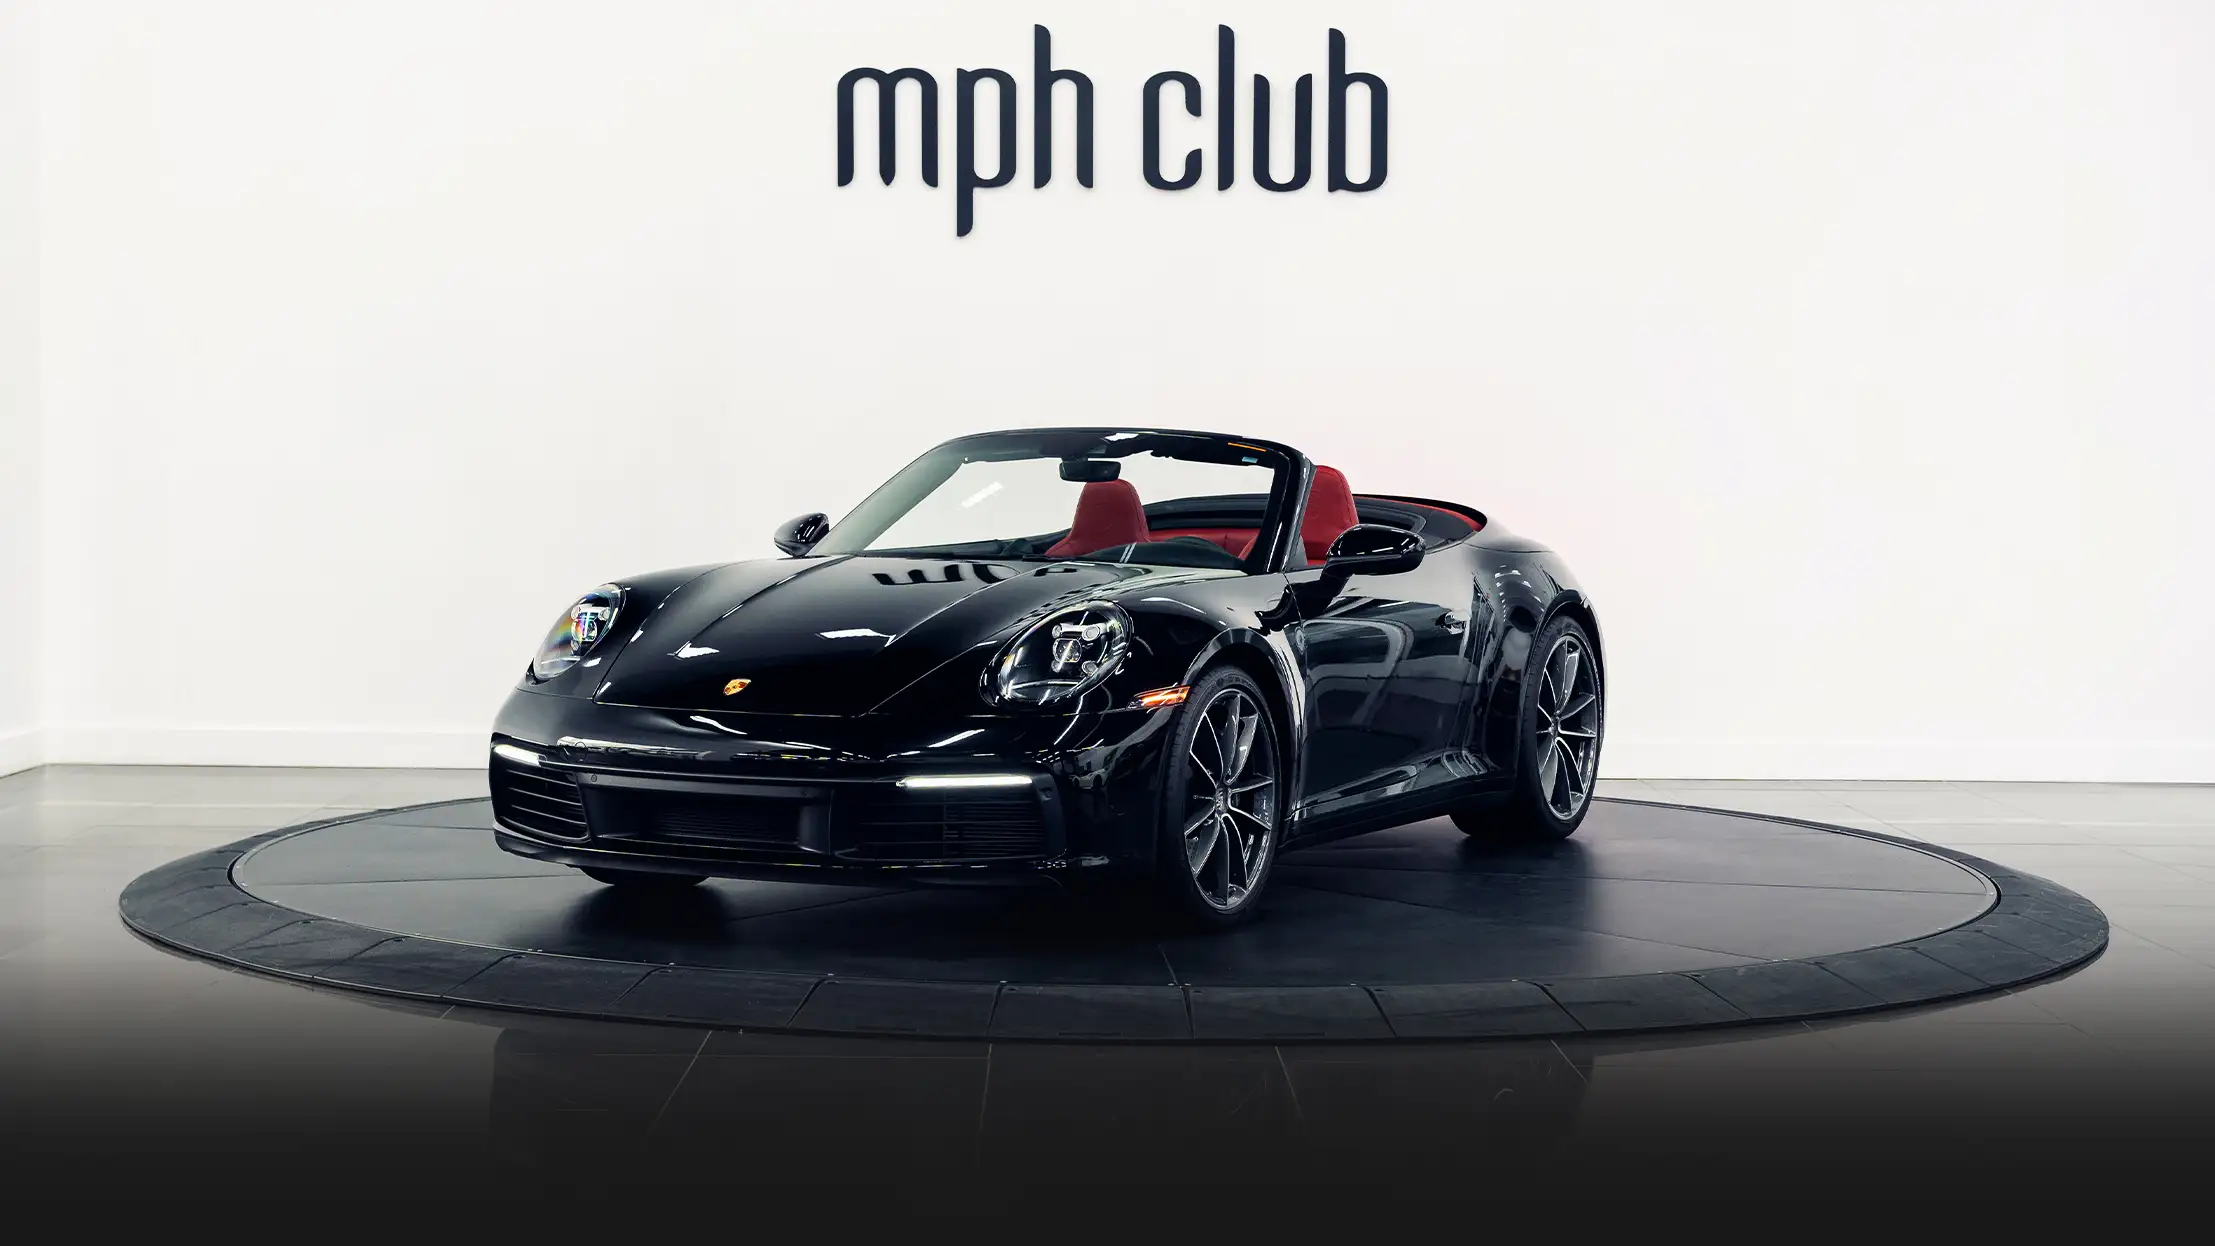 Black Porsche 911 Carrera Cabriolet rental profile view - mph club